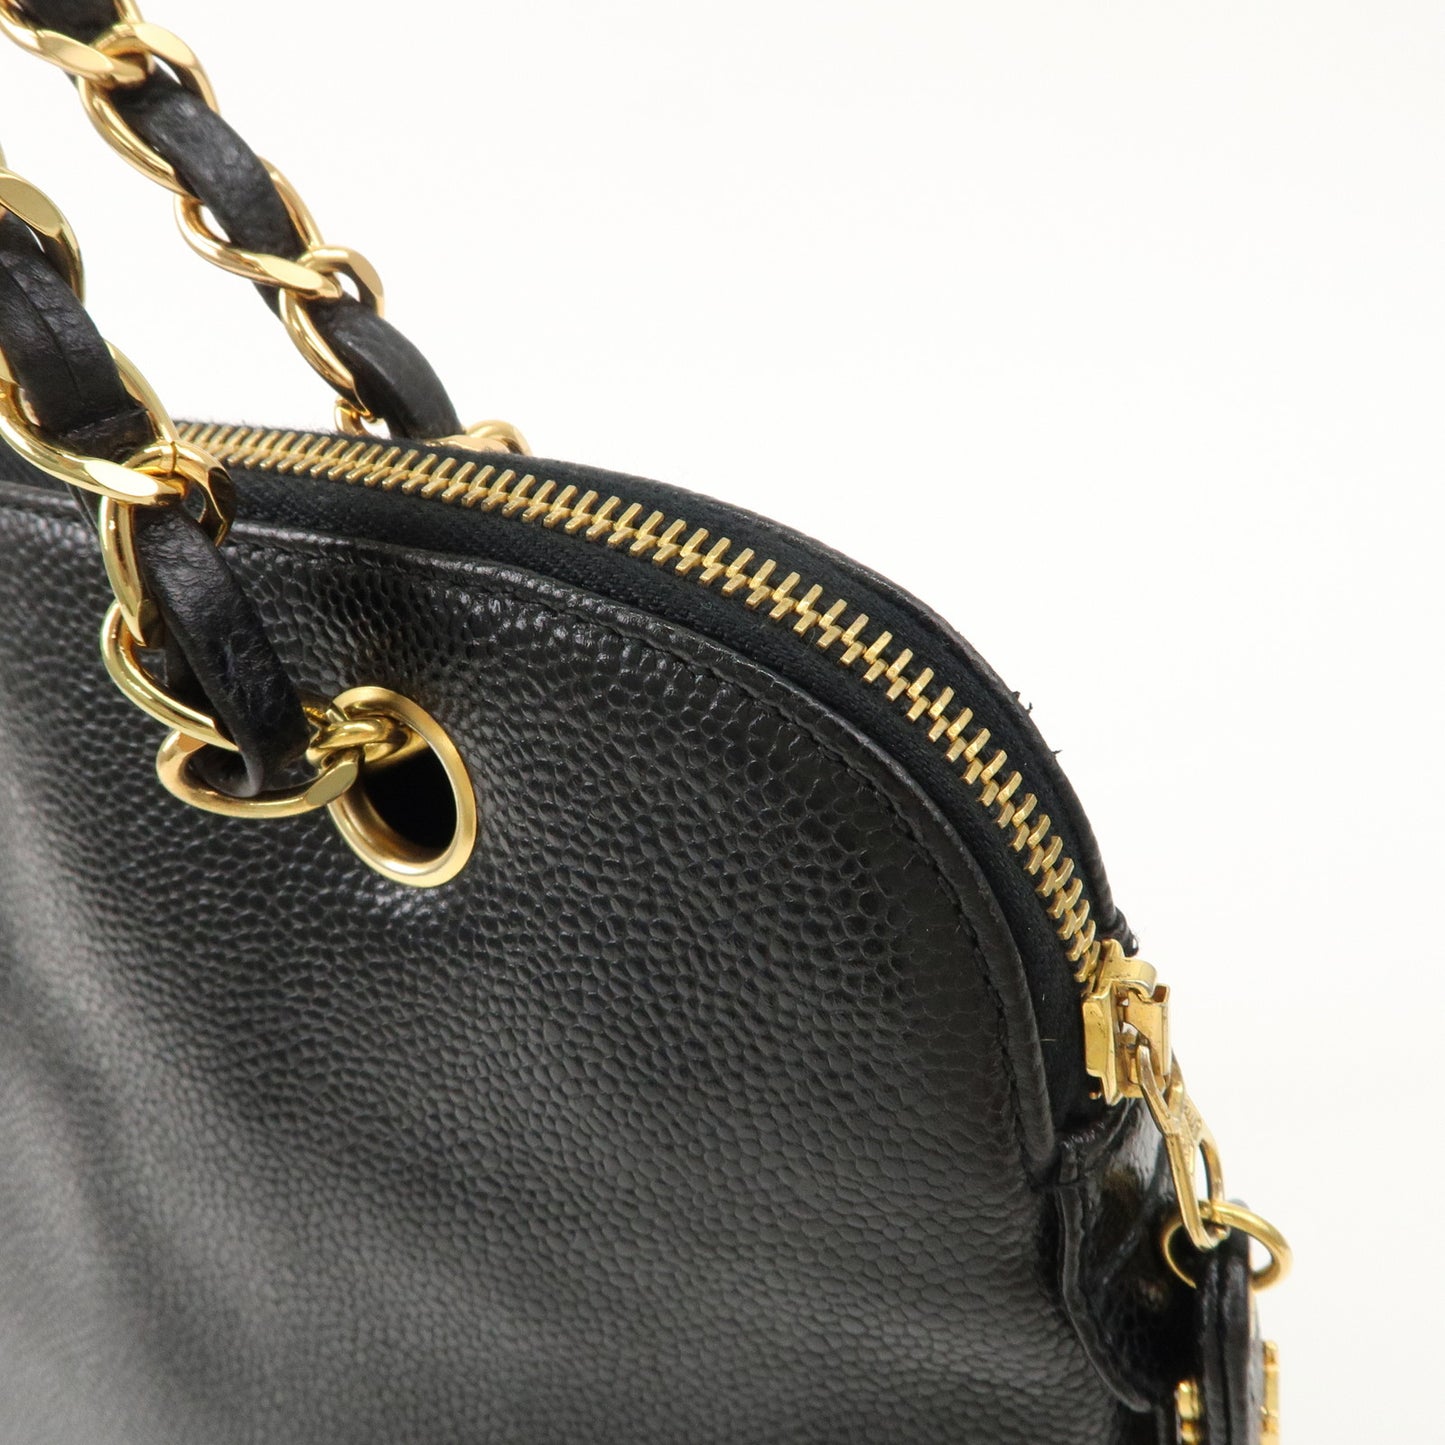 CHANEL Caviar Skin Chain Tote Bag Shoulder Bag Black Gold HDW